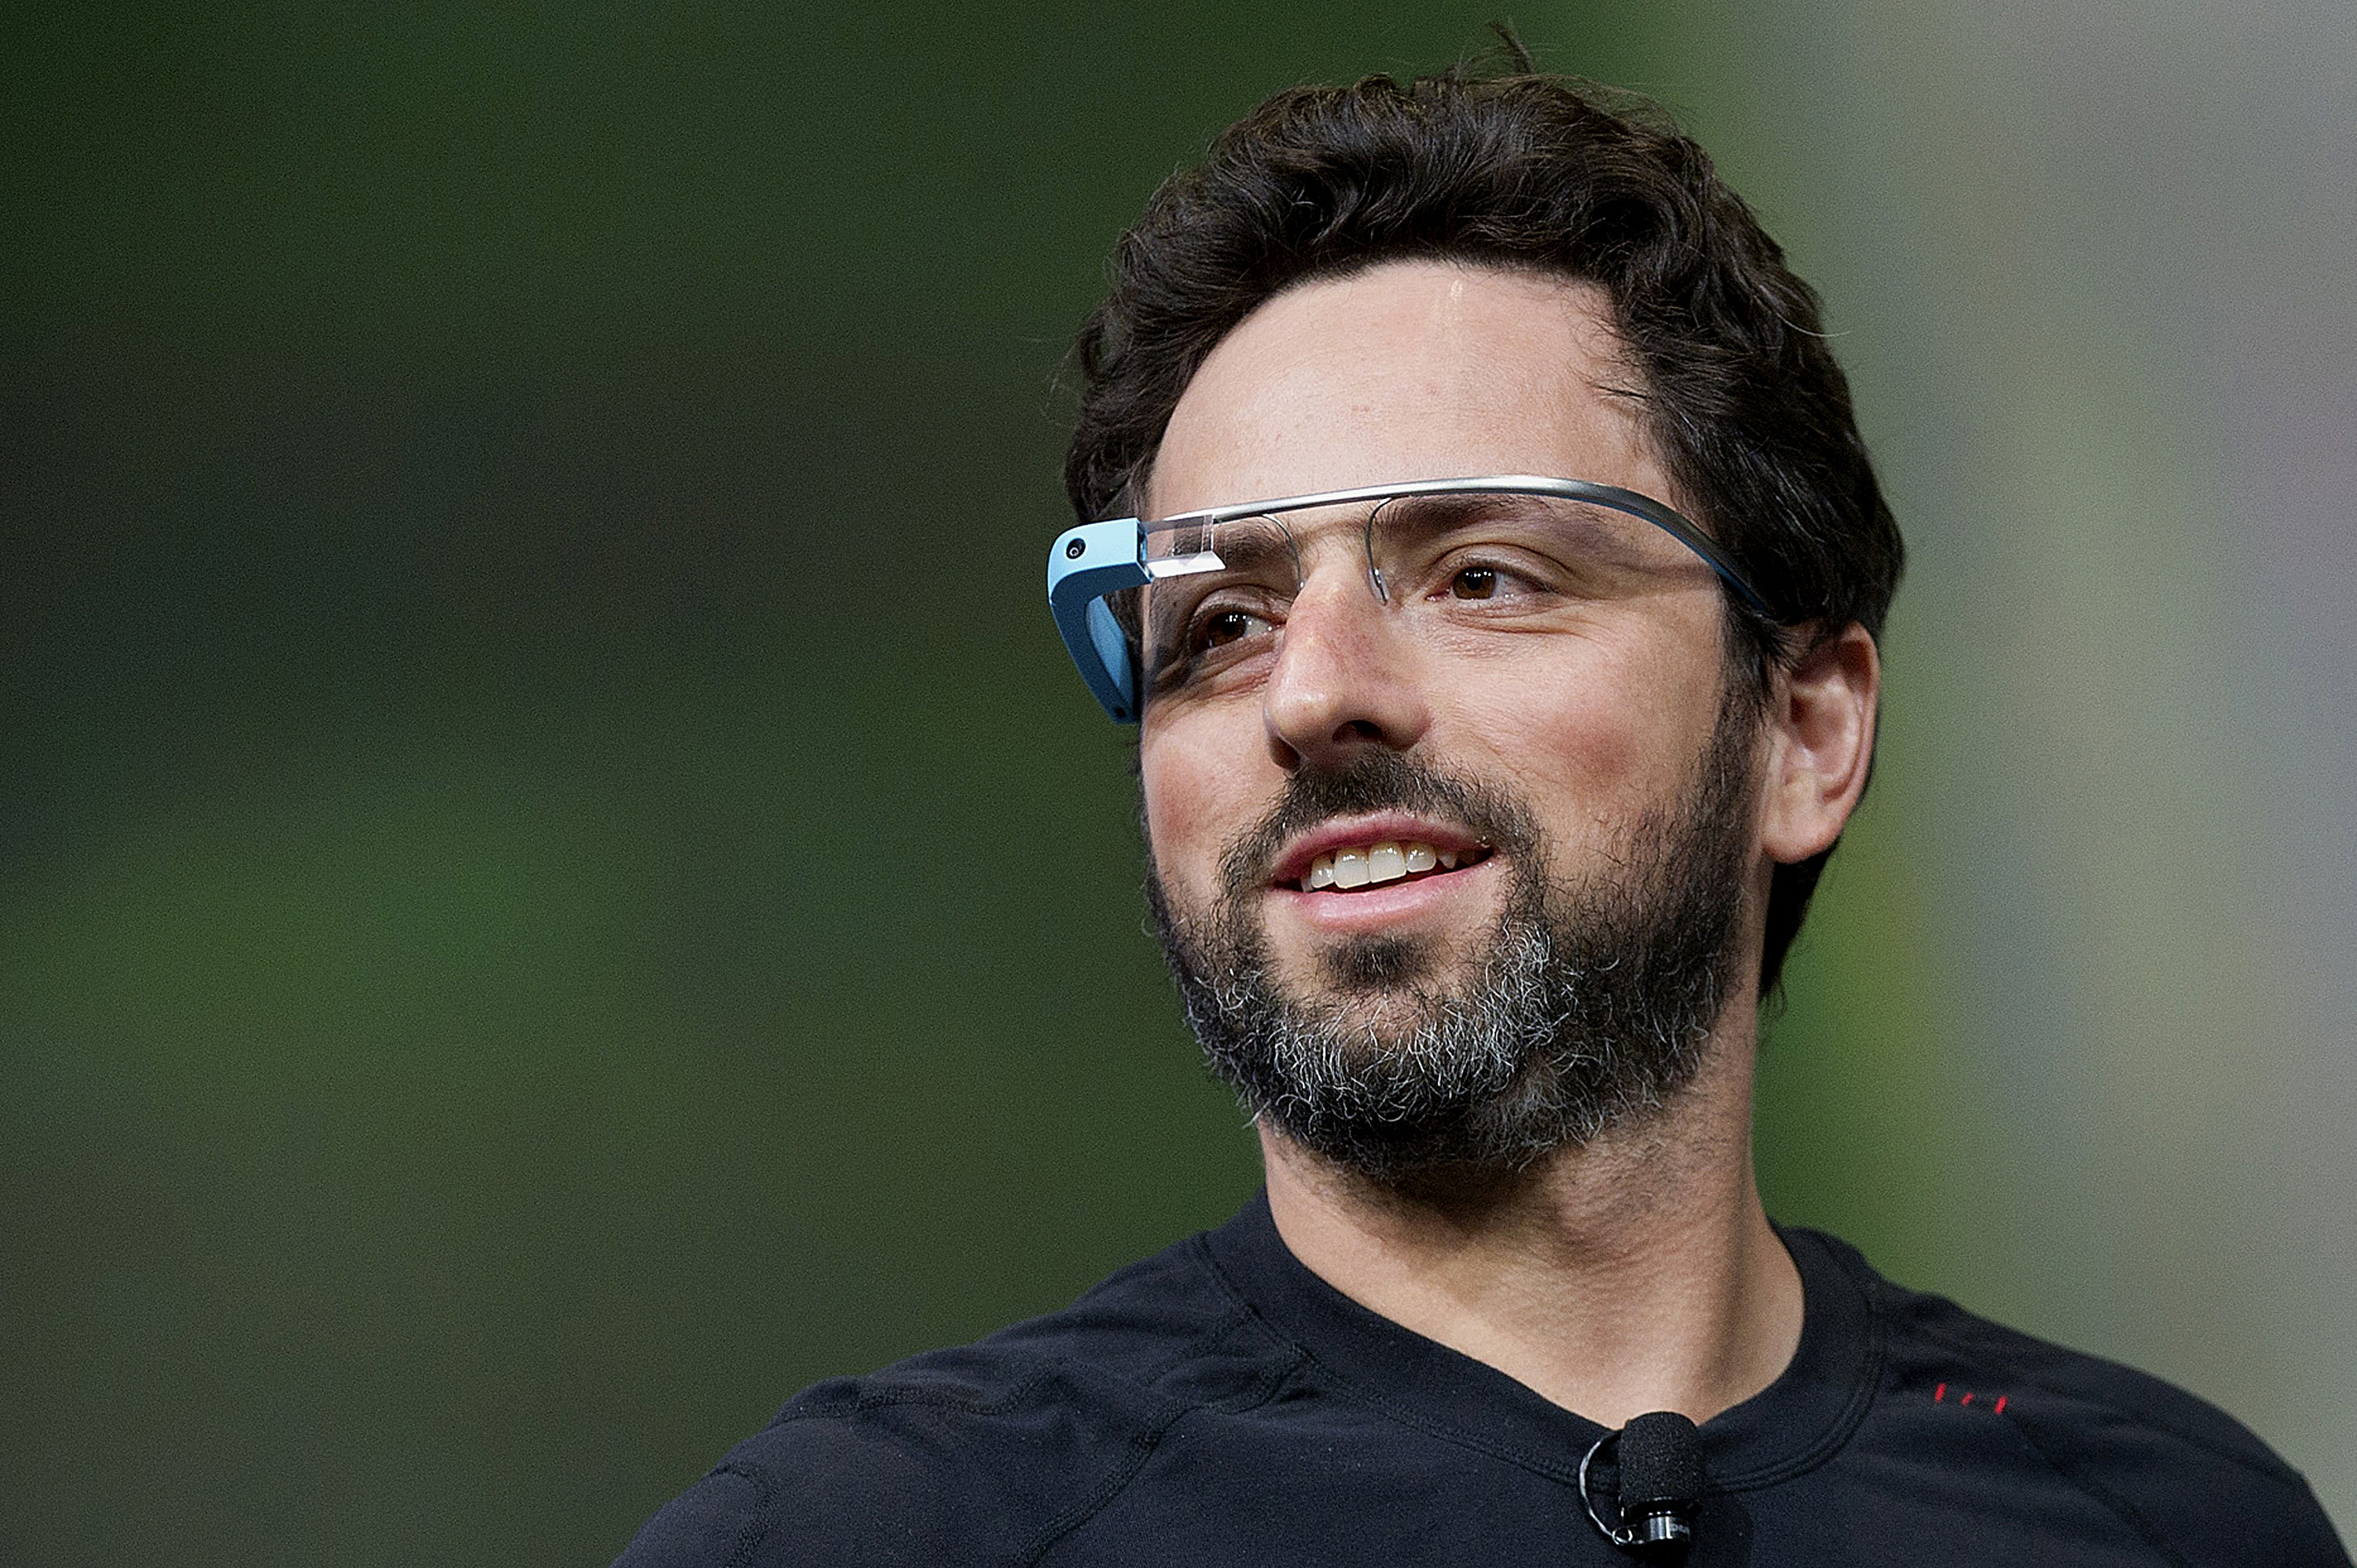 Sergey Brin, co-founder of Google, wearing Google glasses. (David Paul Morris—Bloomberg/Getty Images)